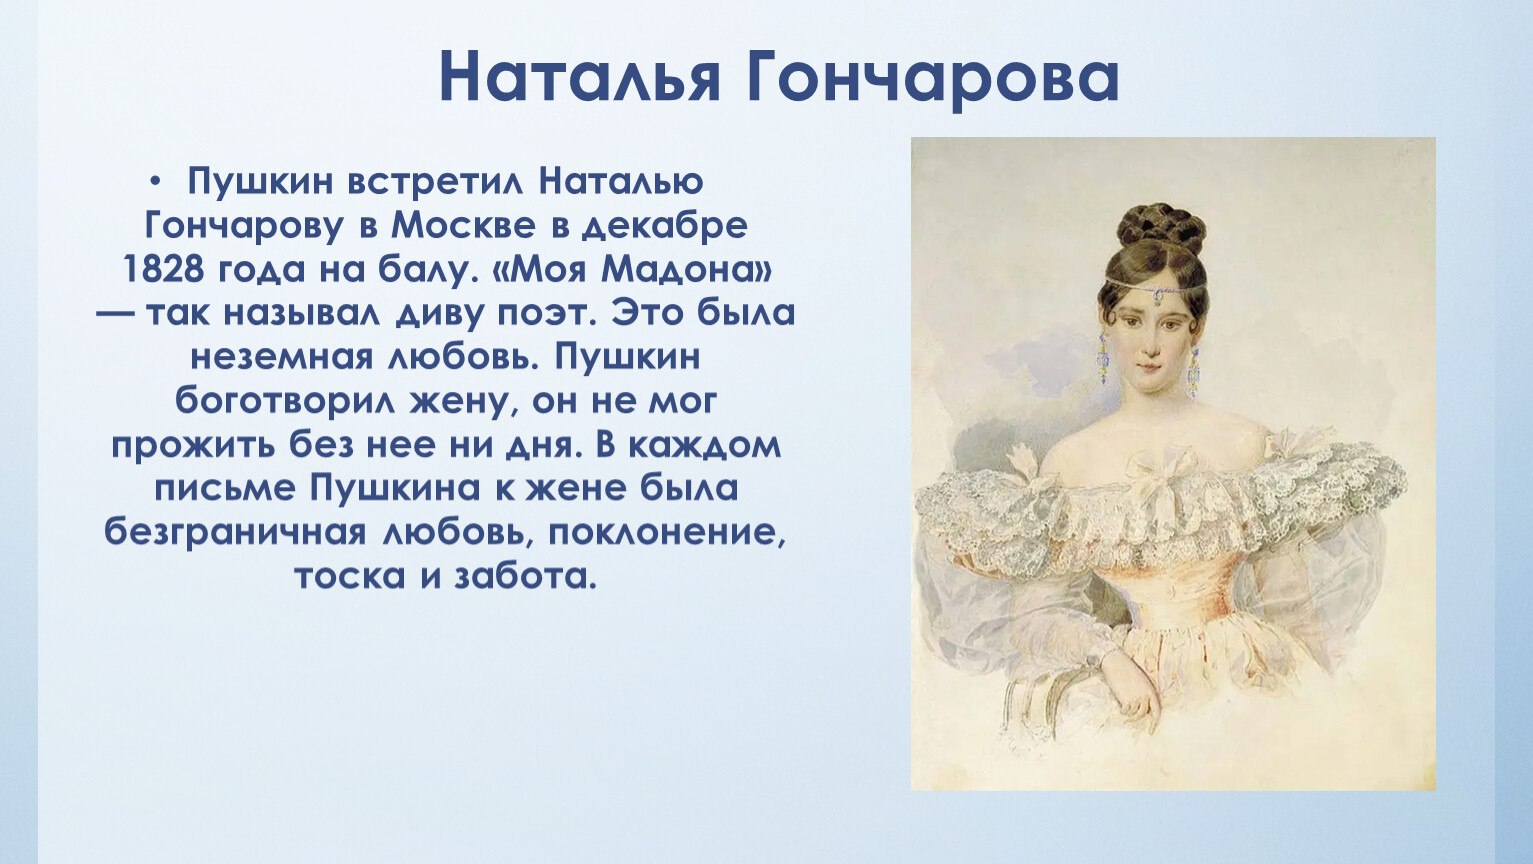 У пушкина было 113 девушек. Н Гончарова и Пушкин. Образ Натальи Гончаровой невесты Пушкина.